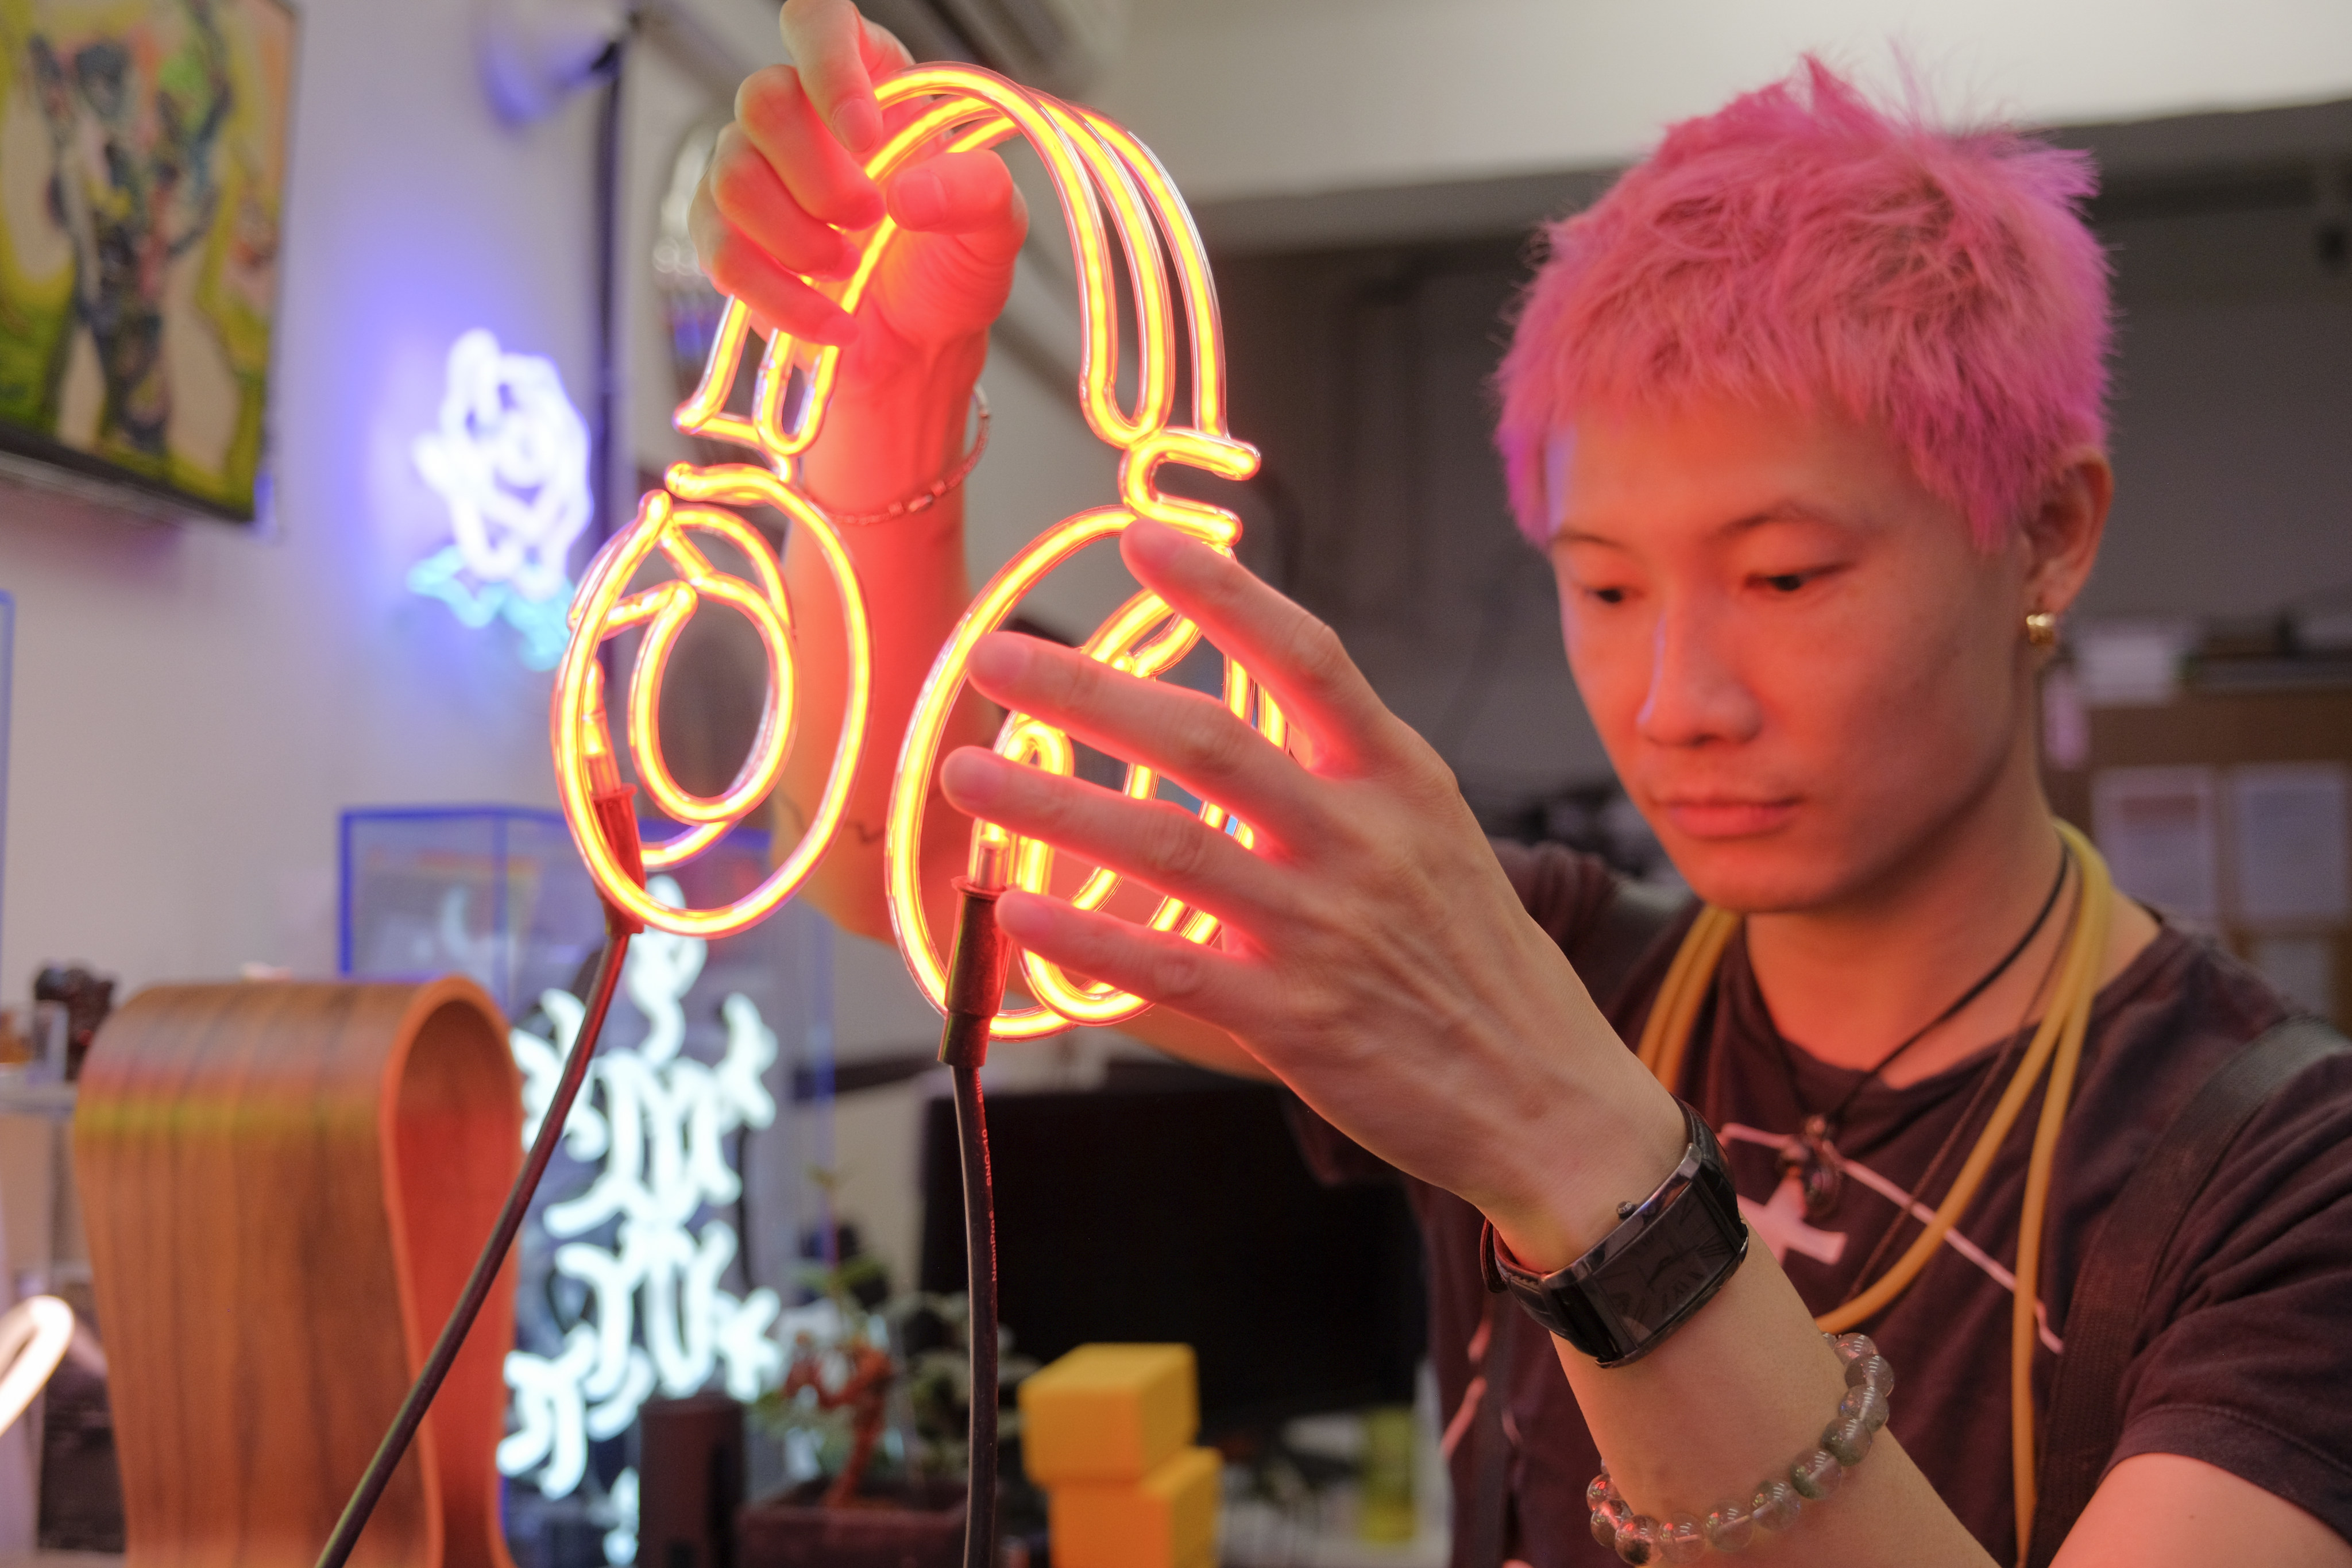 Jive Lau Ho-fai teaches neon-bending workshops at Kowloneon, a neon workspace in Kwun Tong, Hong Kong. Photo: Connor Mycroft